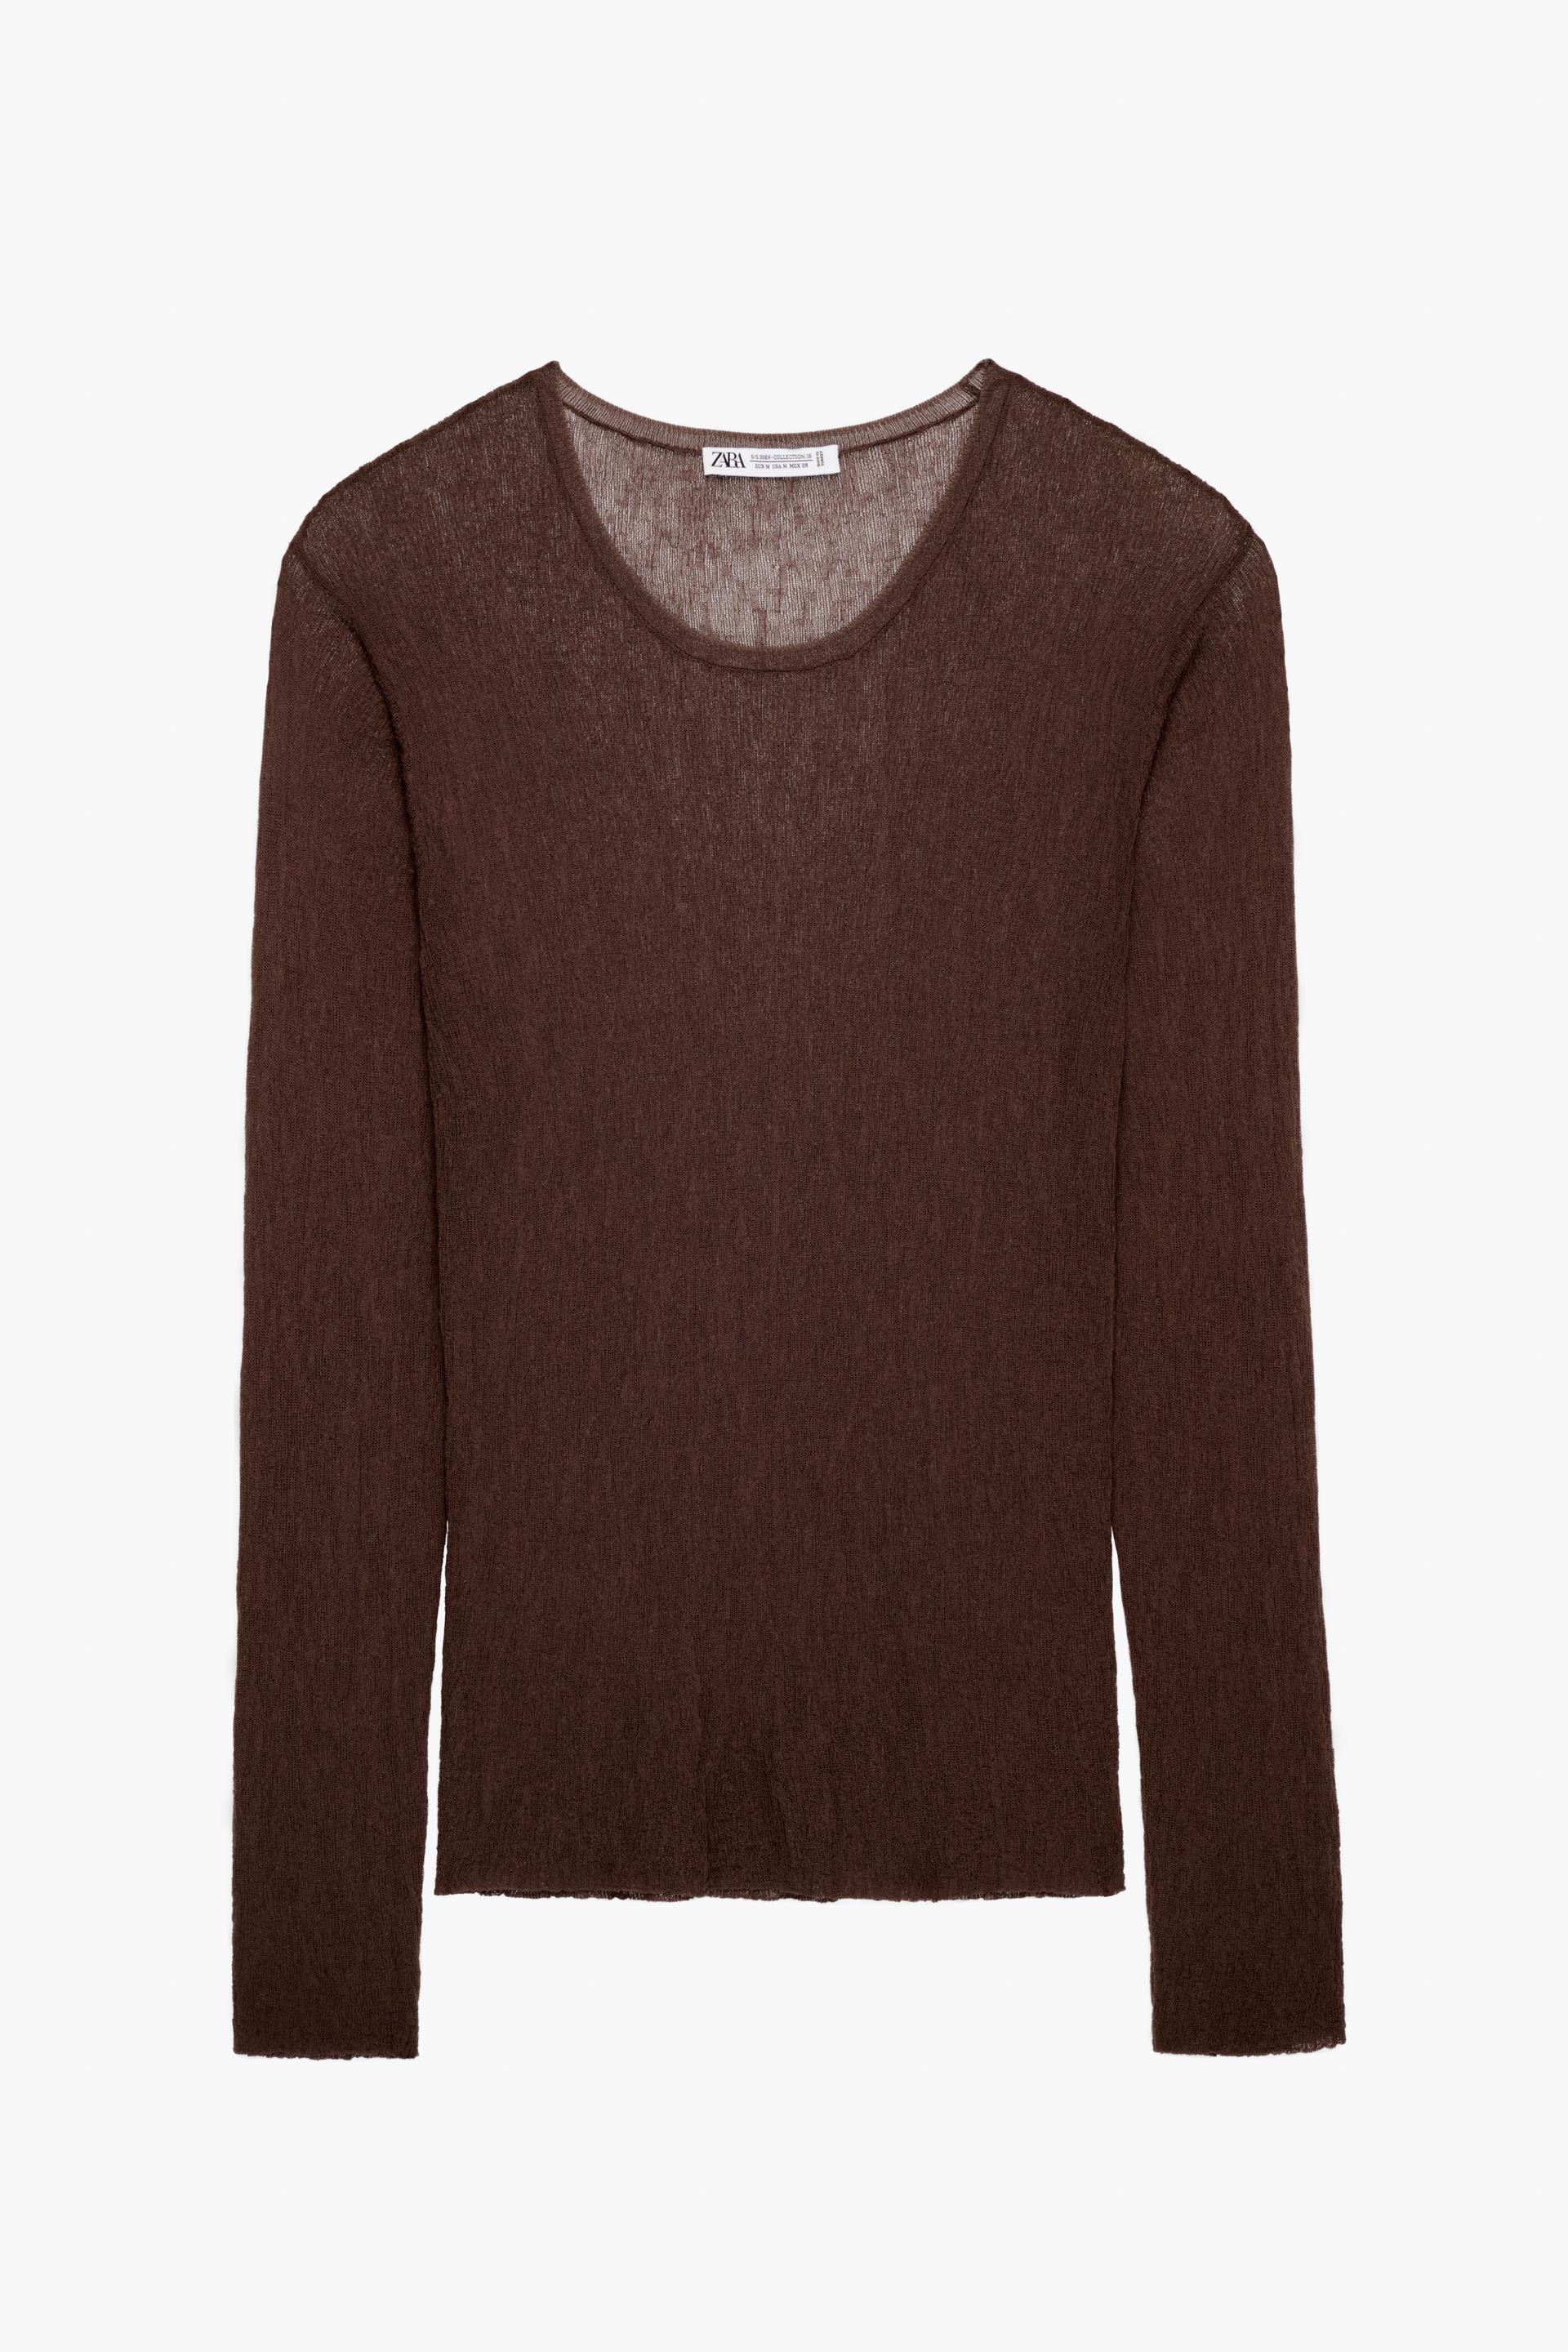 свитер zara textured limited edition светло бежевый Свитер Zara Textured Limited Edition, коричневый